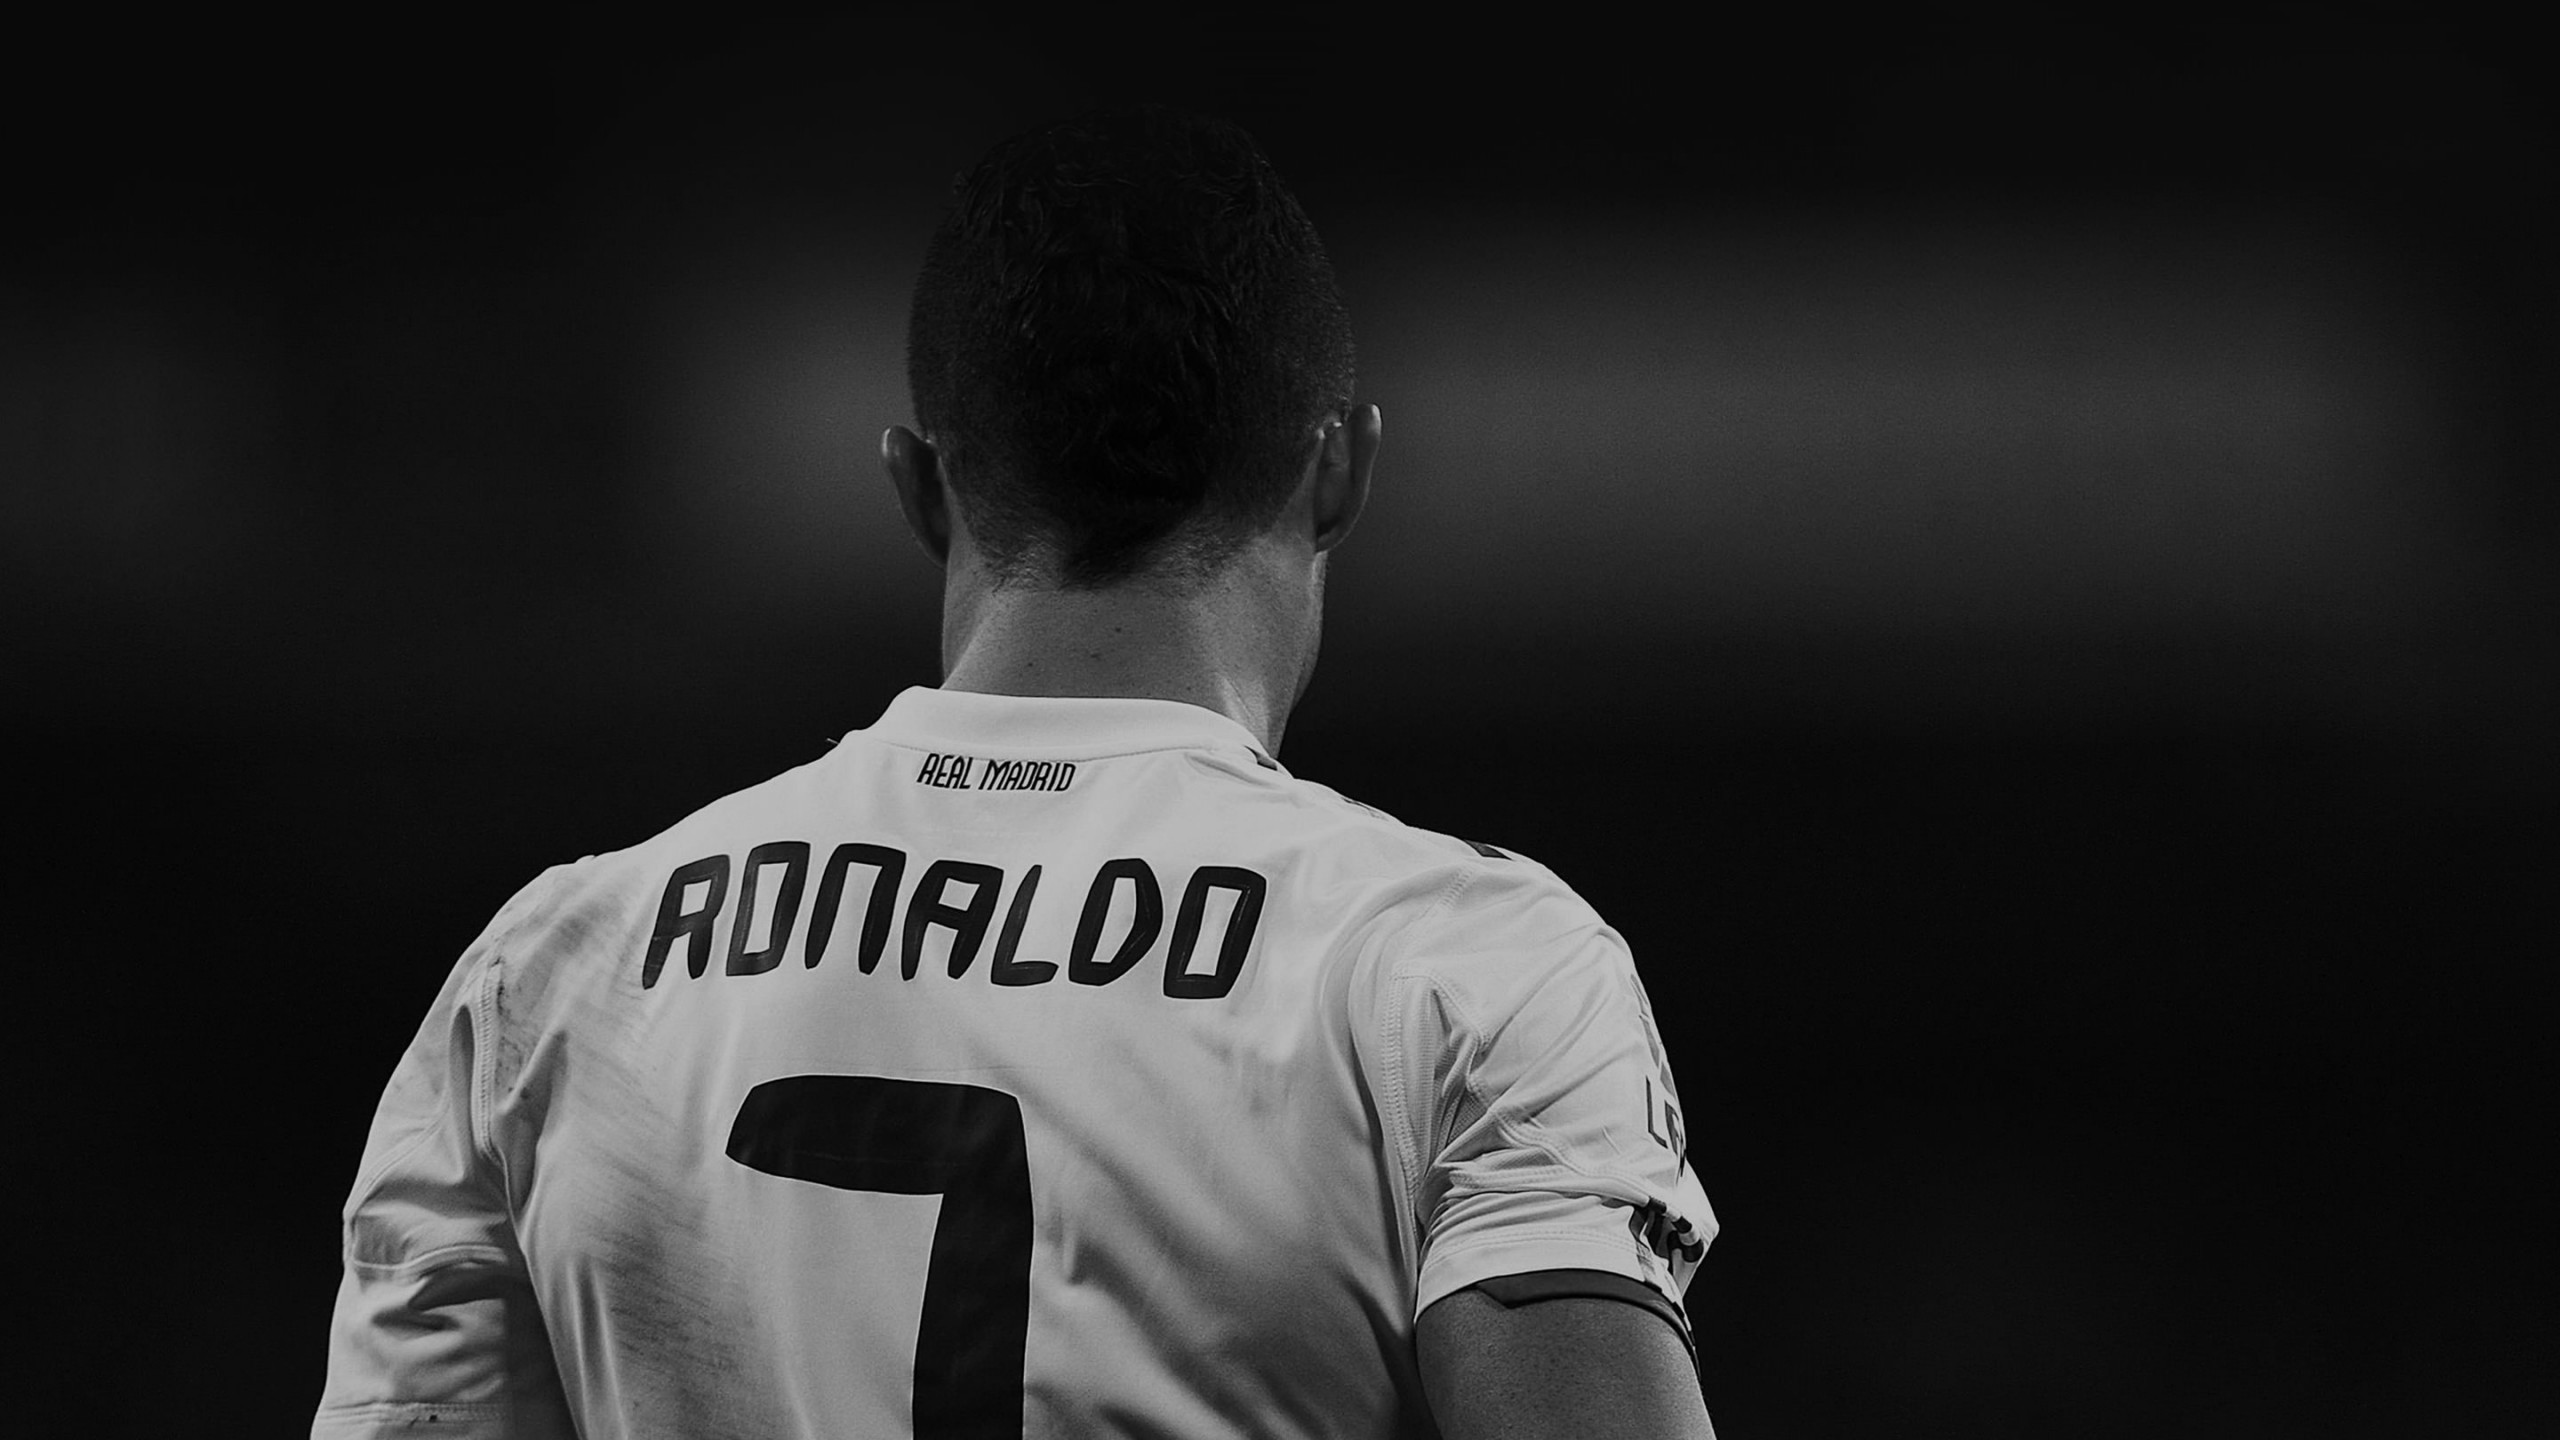 Cristiano Ronaldo in Black & White Wallpaper for Social Media YouTube Channel Art